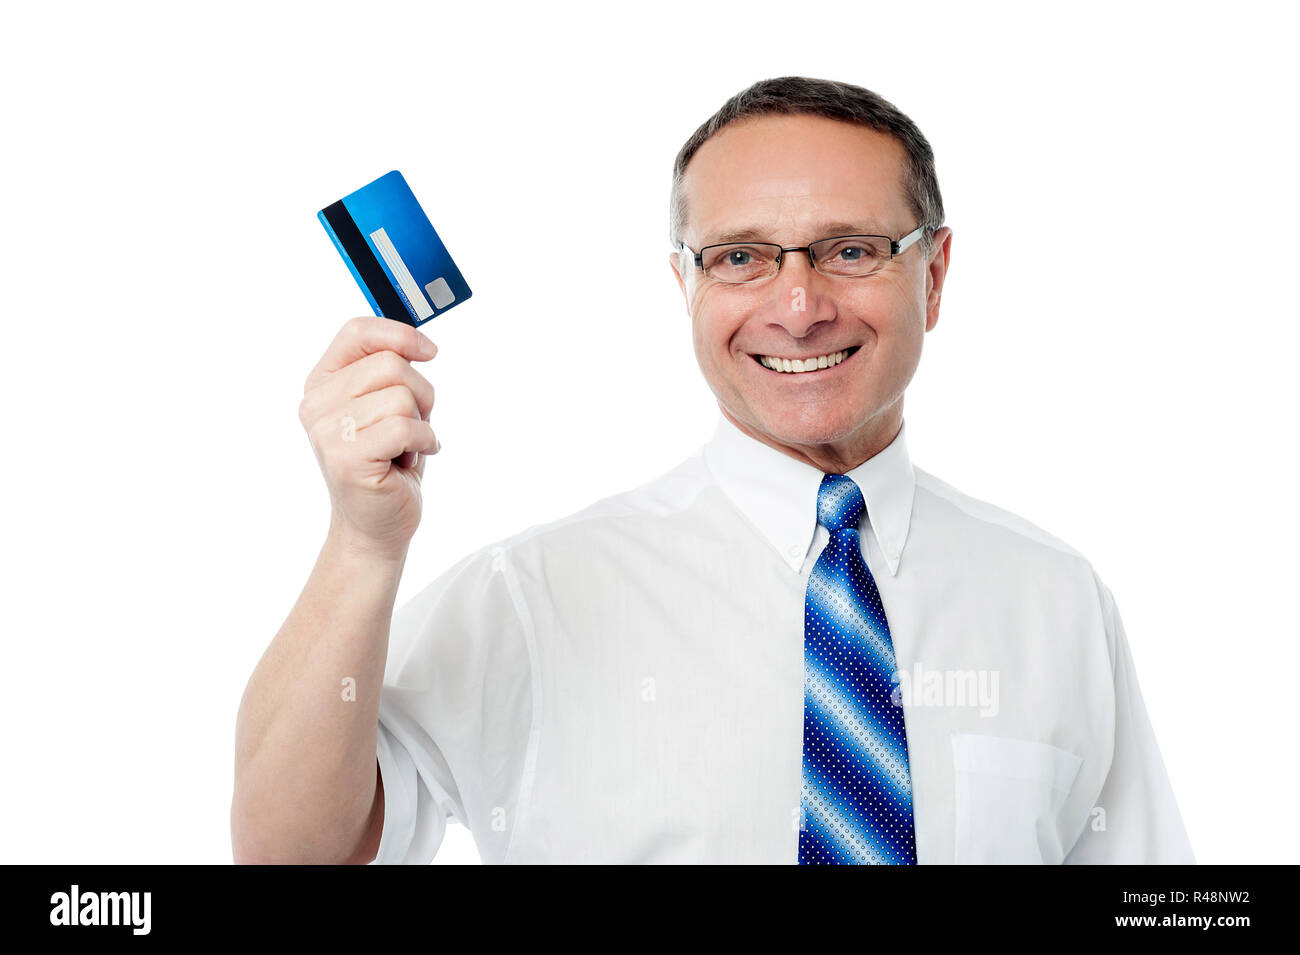 Do you need cash card? Stock Photo